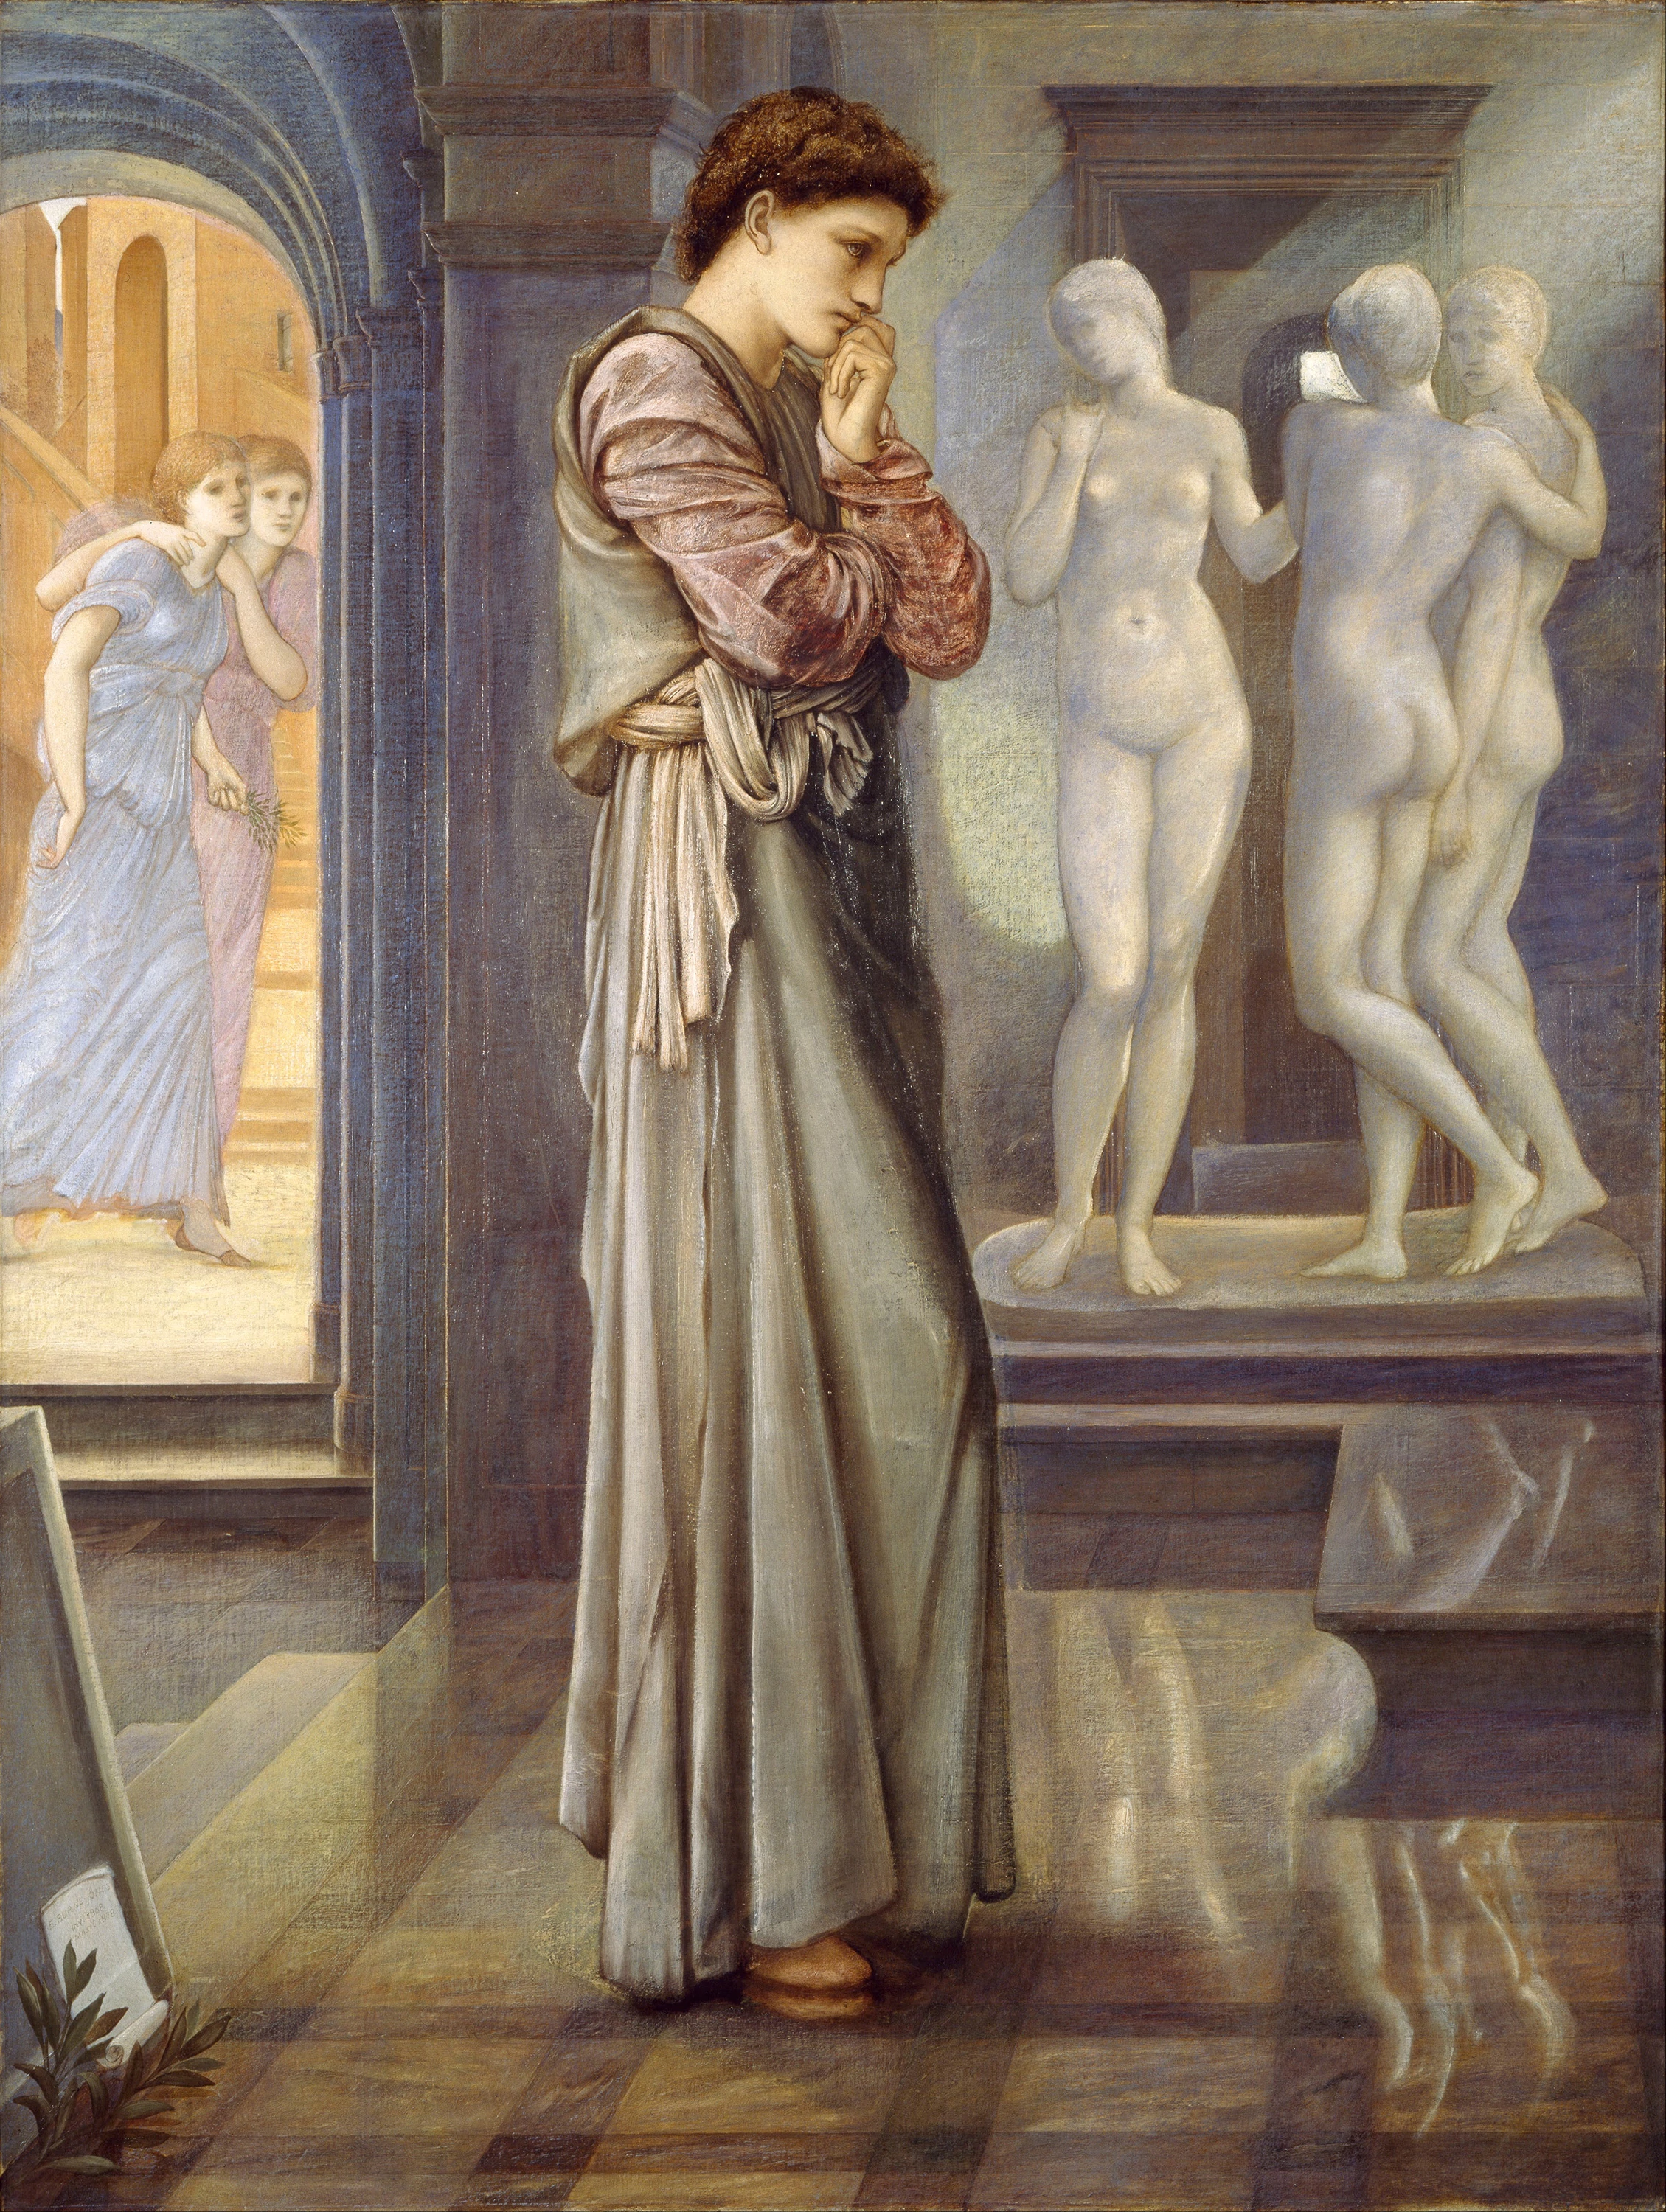 Pygmalion and the Image — The Heart Desires, Edward Burne-Jones